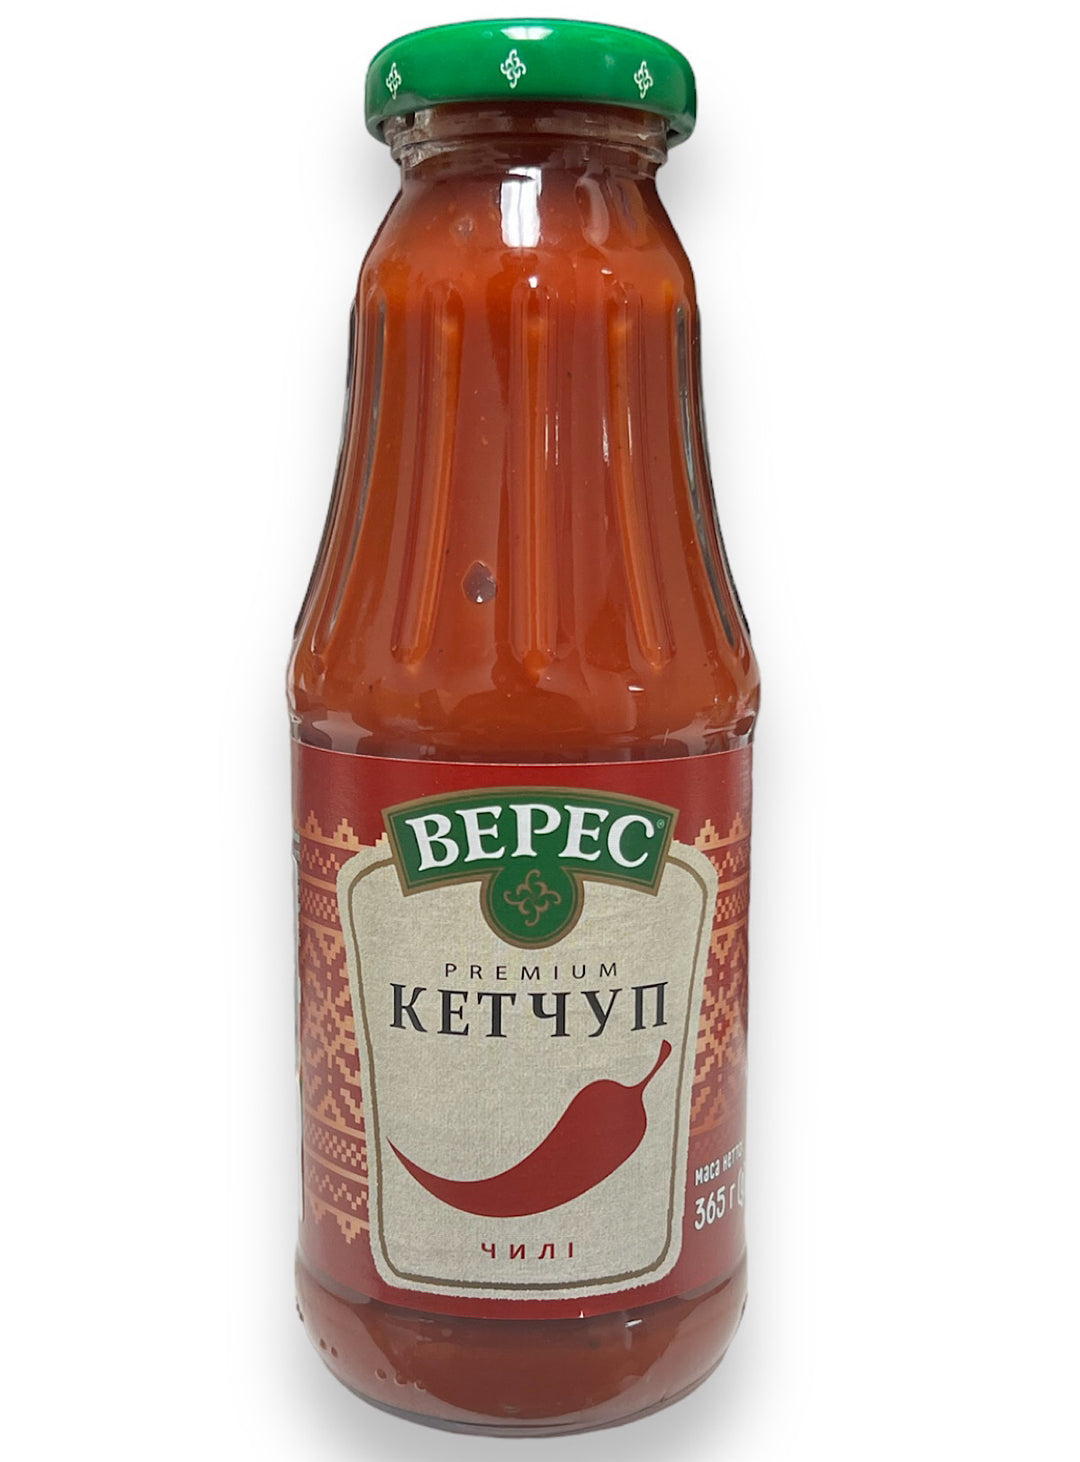 Ketchup Chili Premium - VERES - 365g